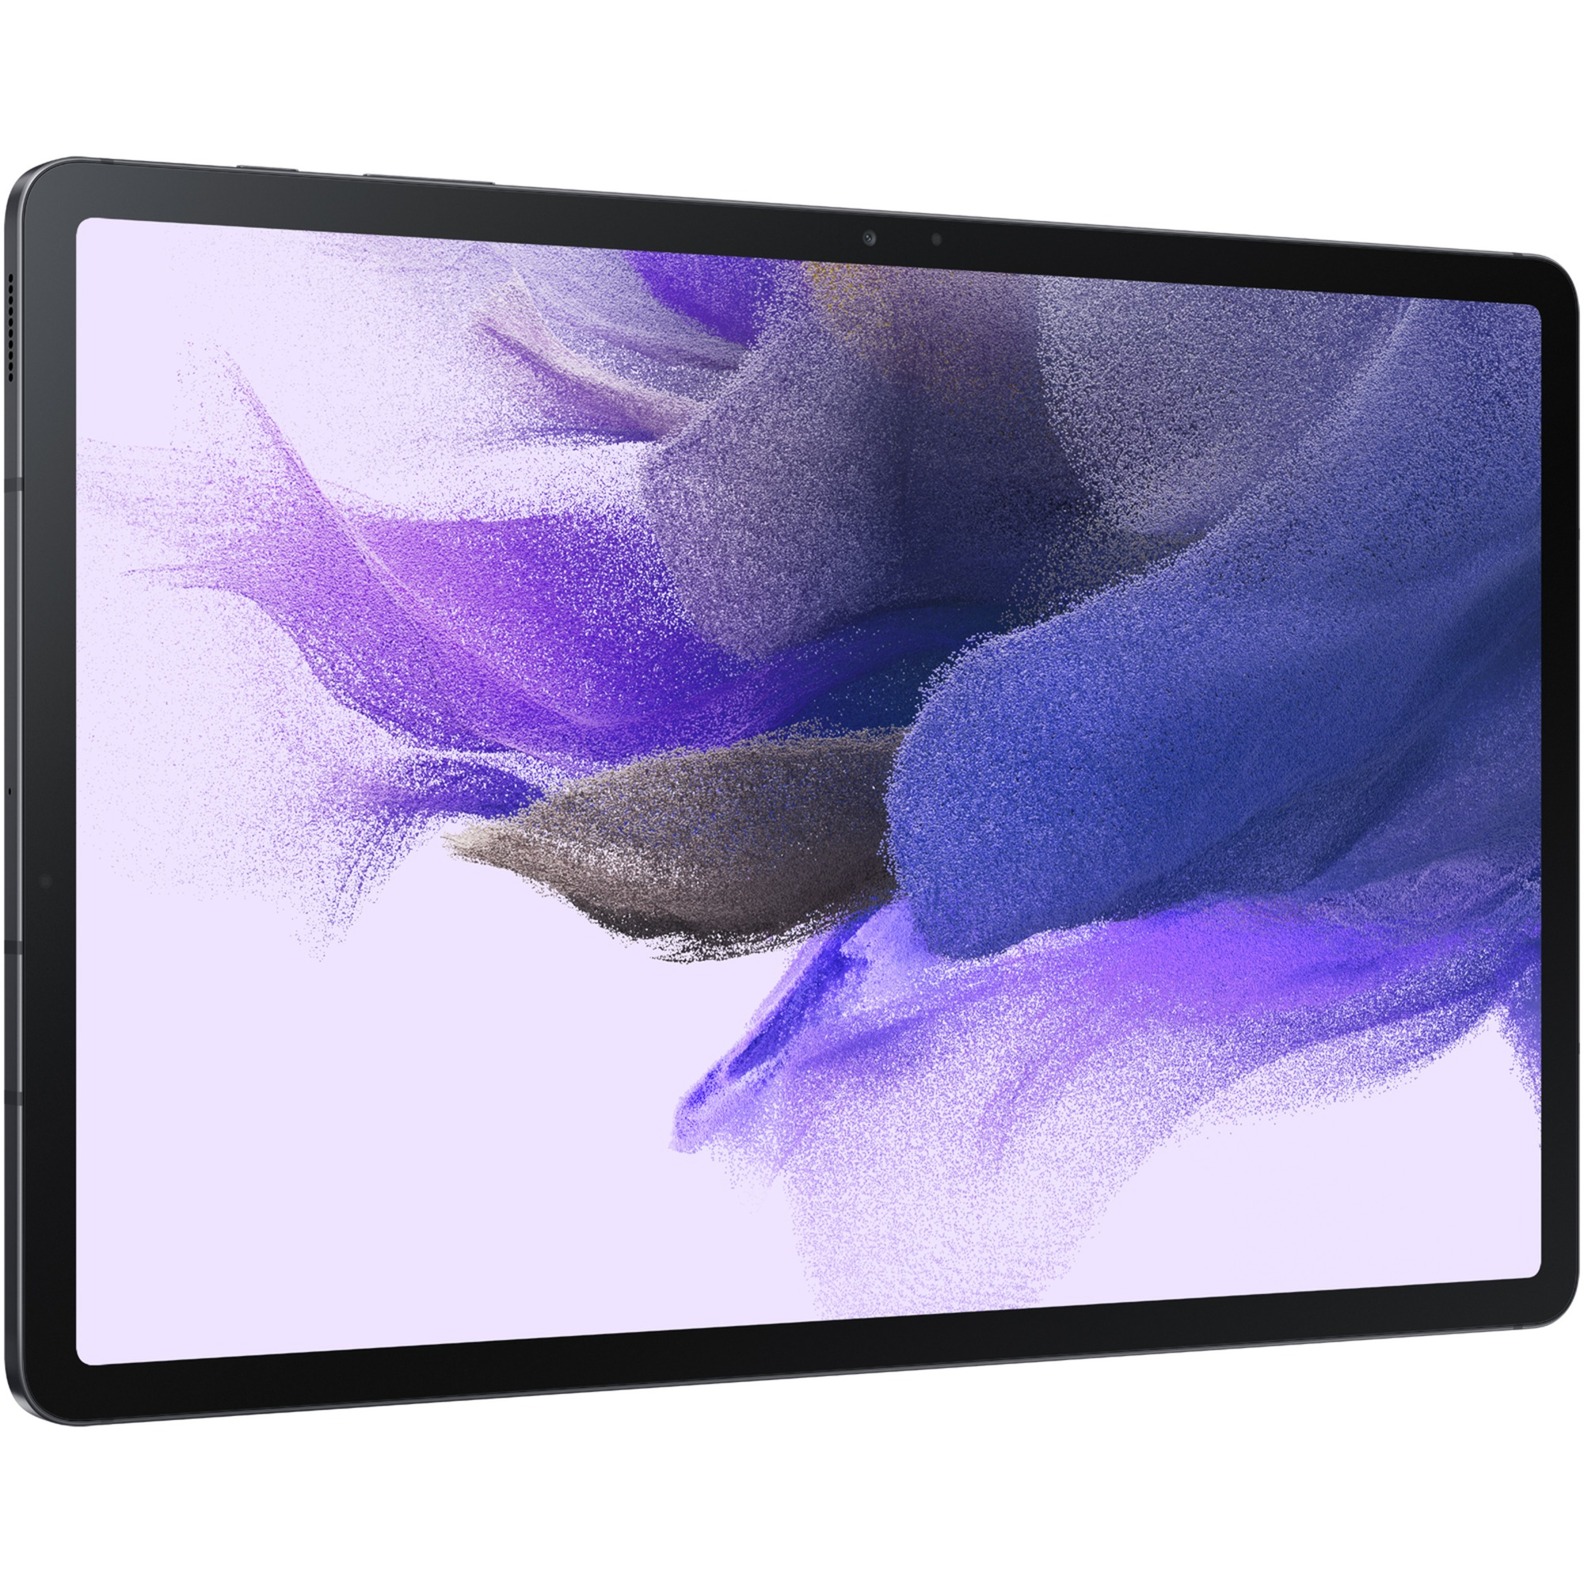 Image of Alternate - Galaxy Tab S7 FE Wi-Fi 128GB, Tablet-PC online einkaufen bei Alternate